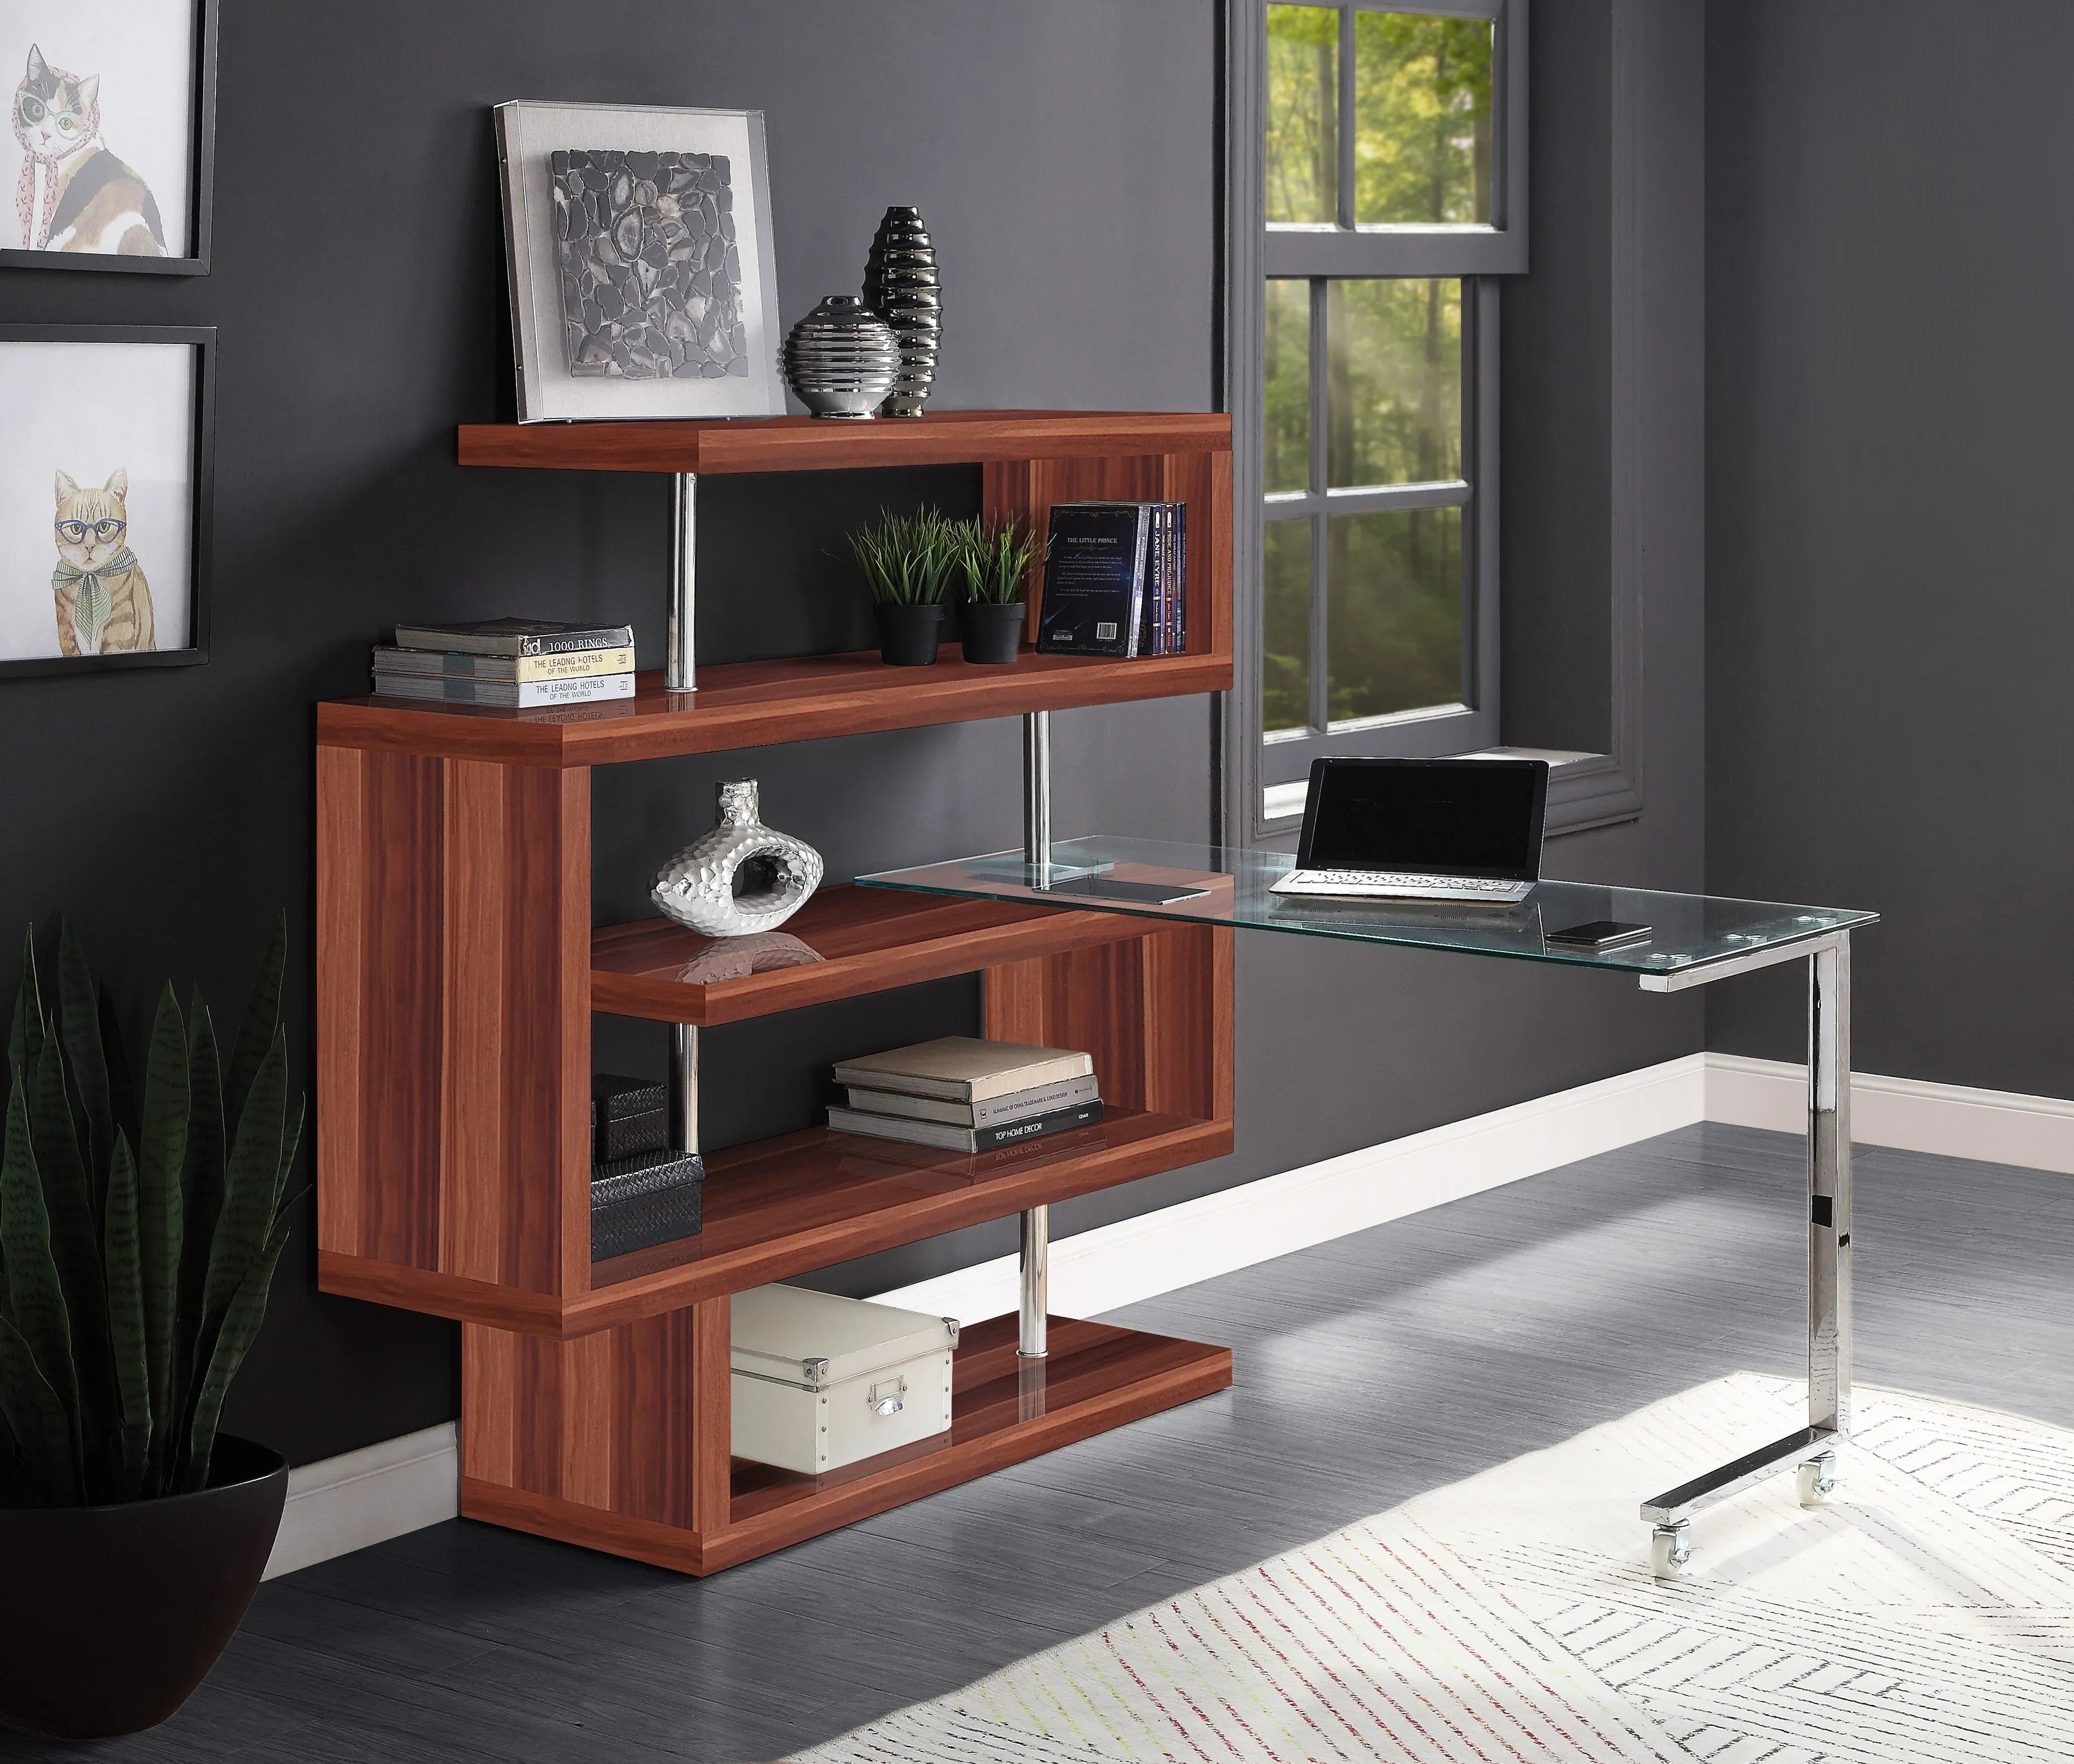 Raceloma Clear Glass, Walnut & Chrome Finish Writing Desk Model 93183 By ACME Furniture